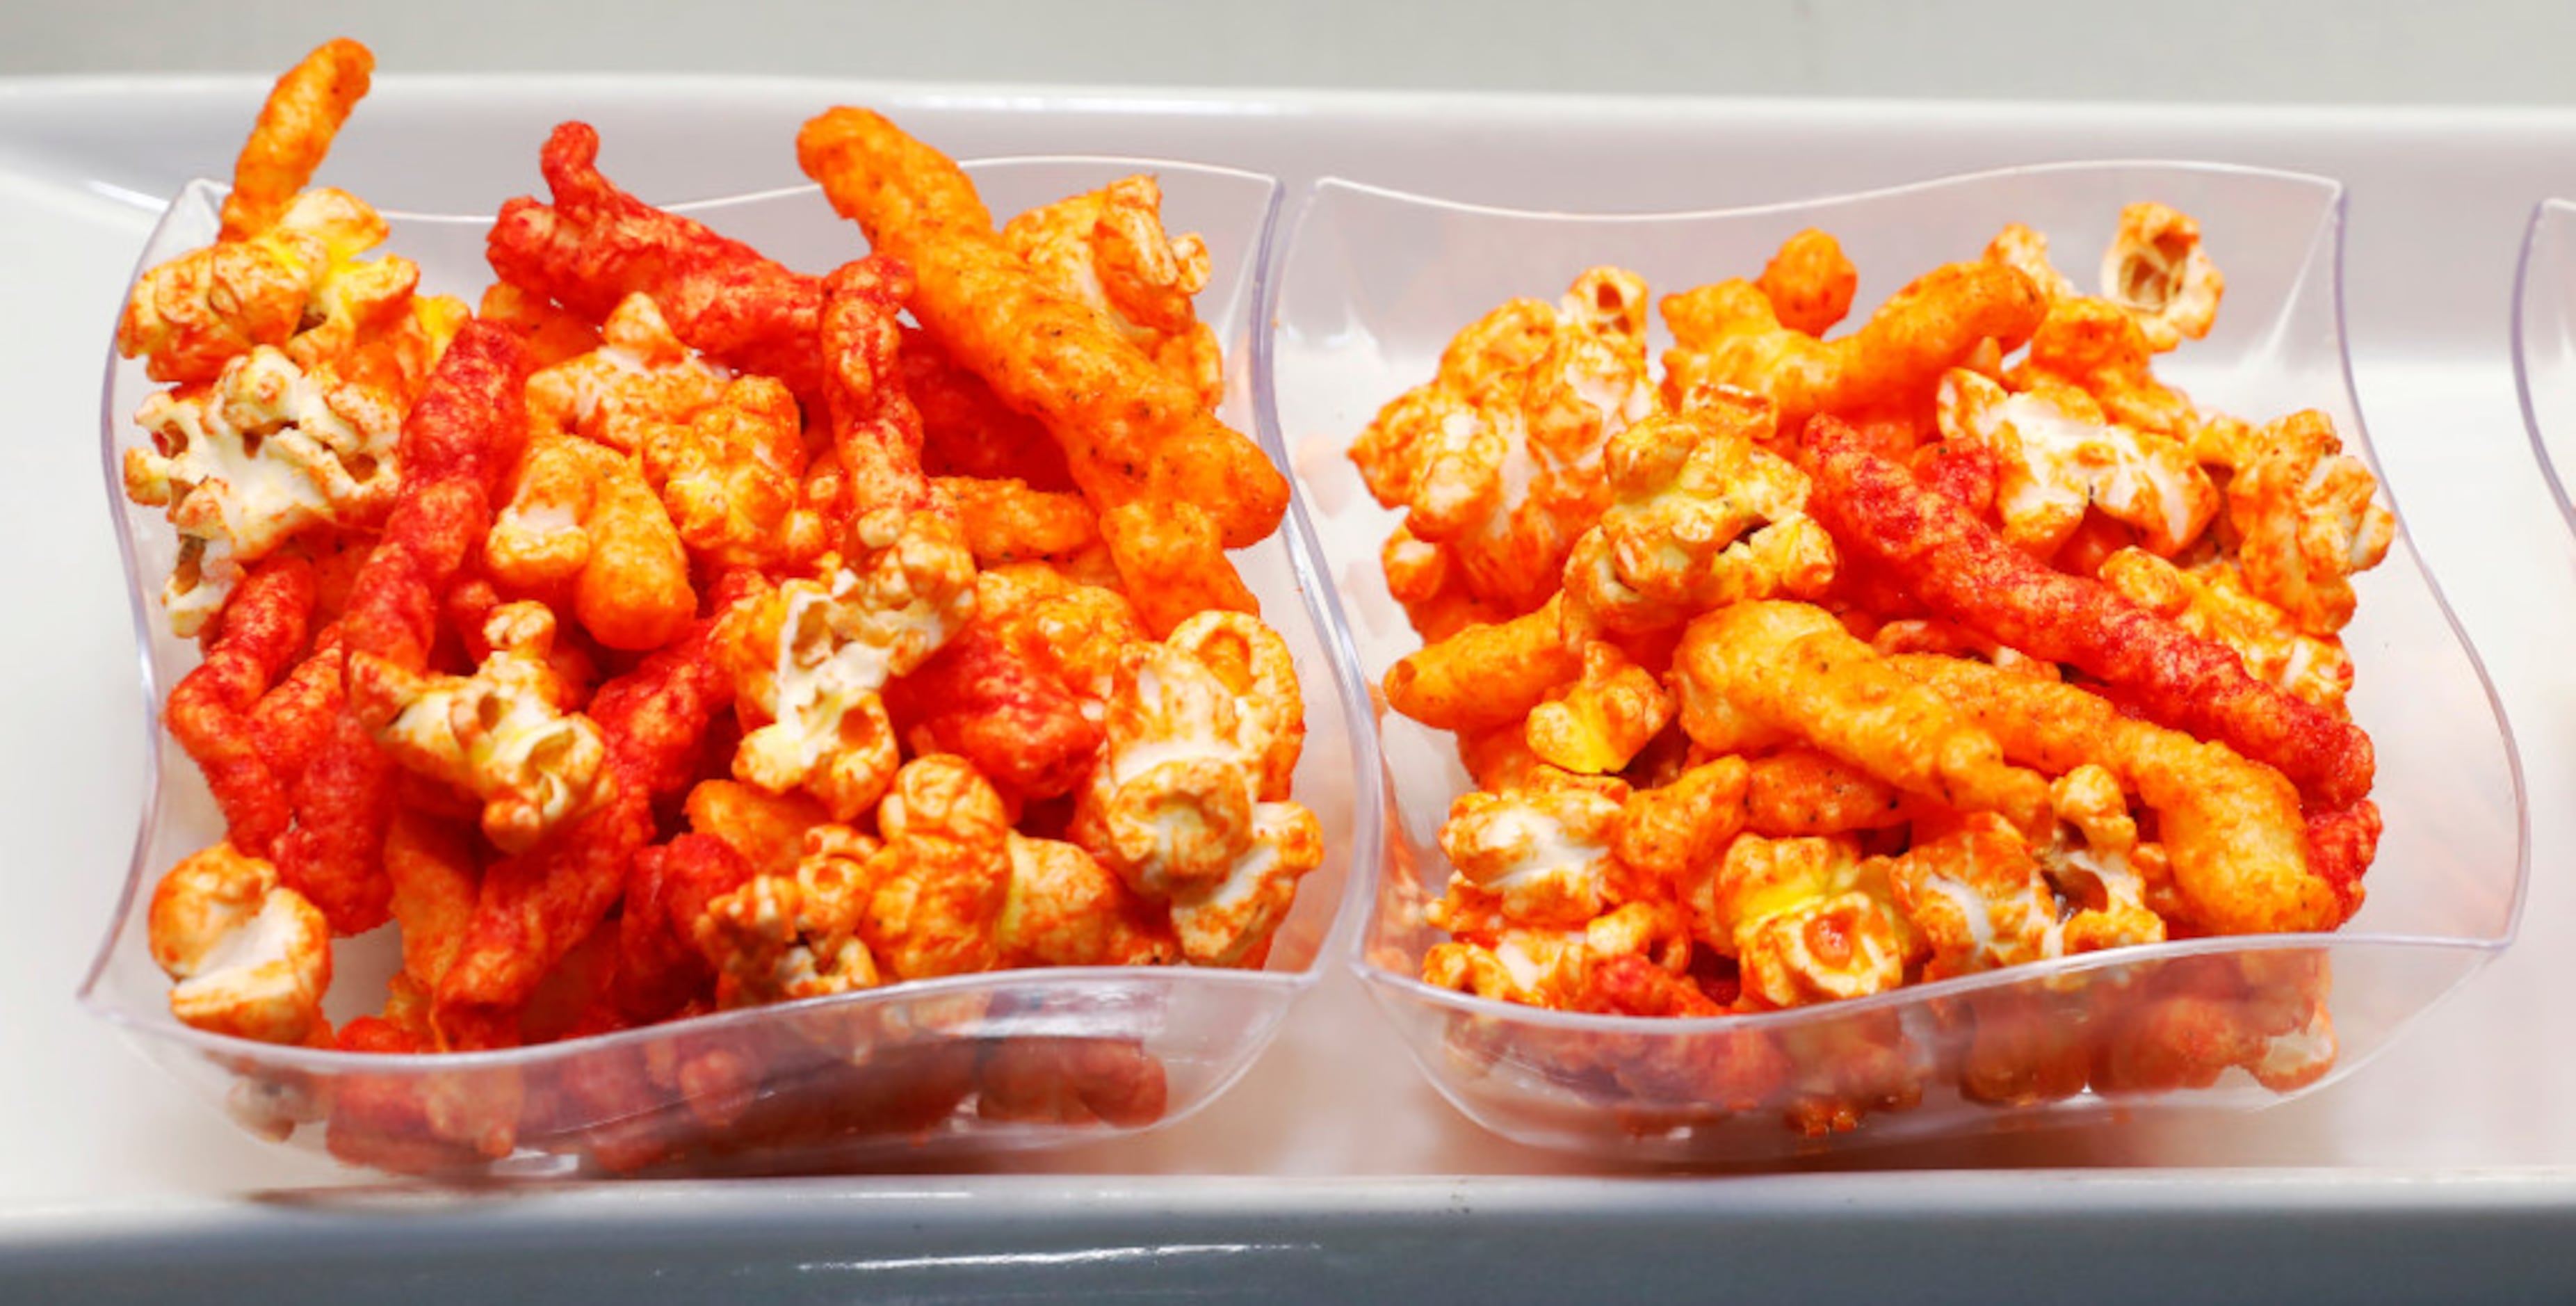 How Hot Cheetos became so popular with U.S. Latinos – NBC Chicago